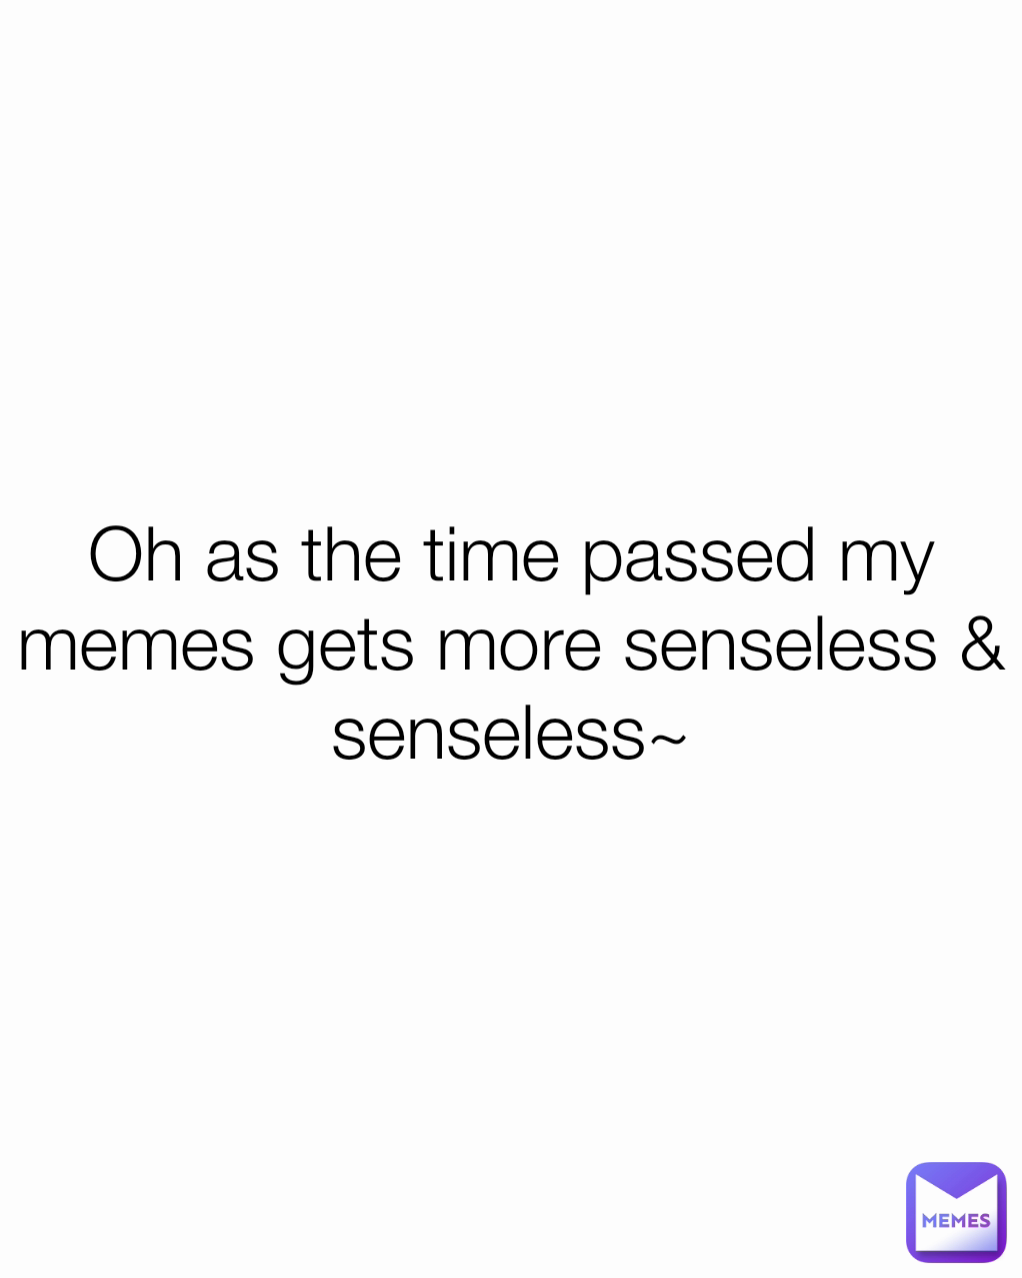 Oh as the time passed my memes gets more senseless & senseless~